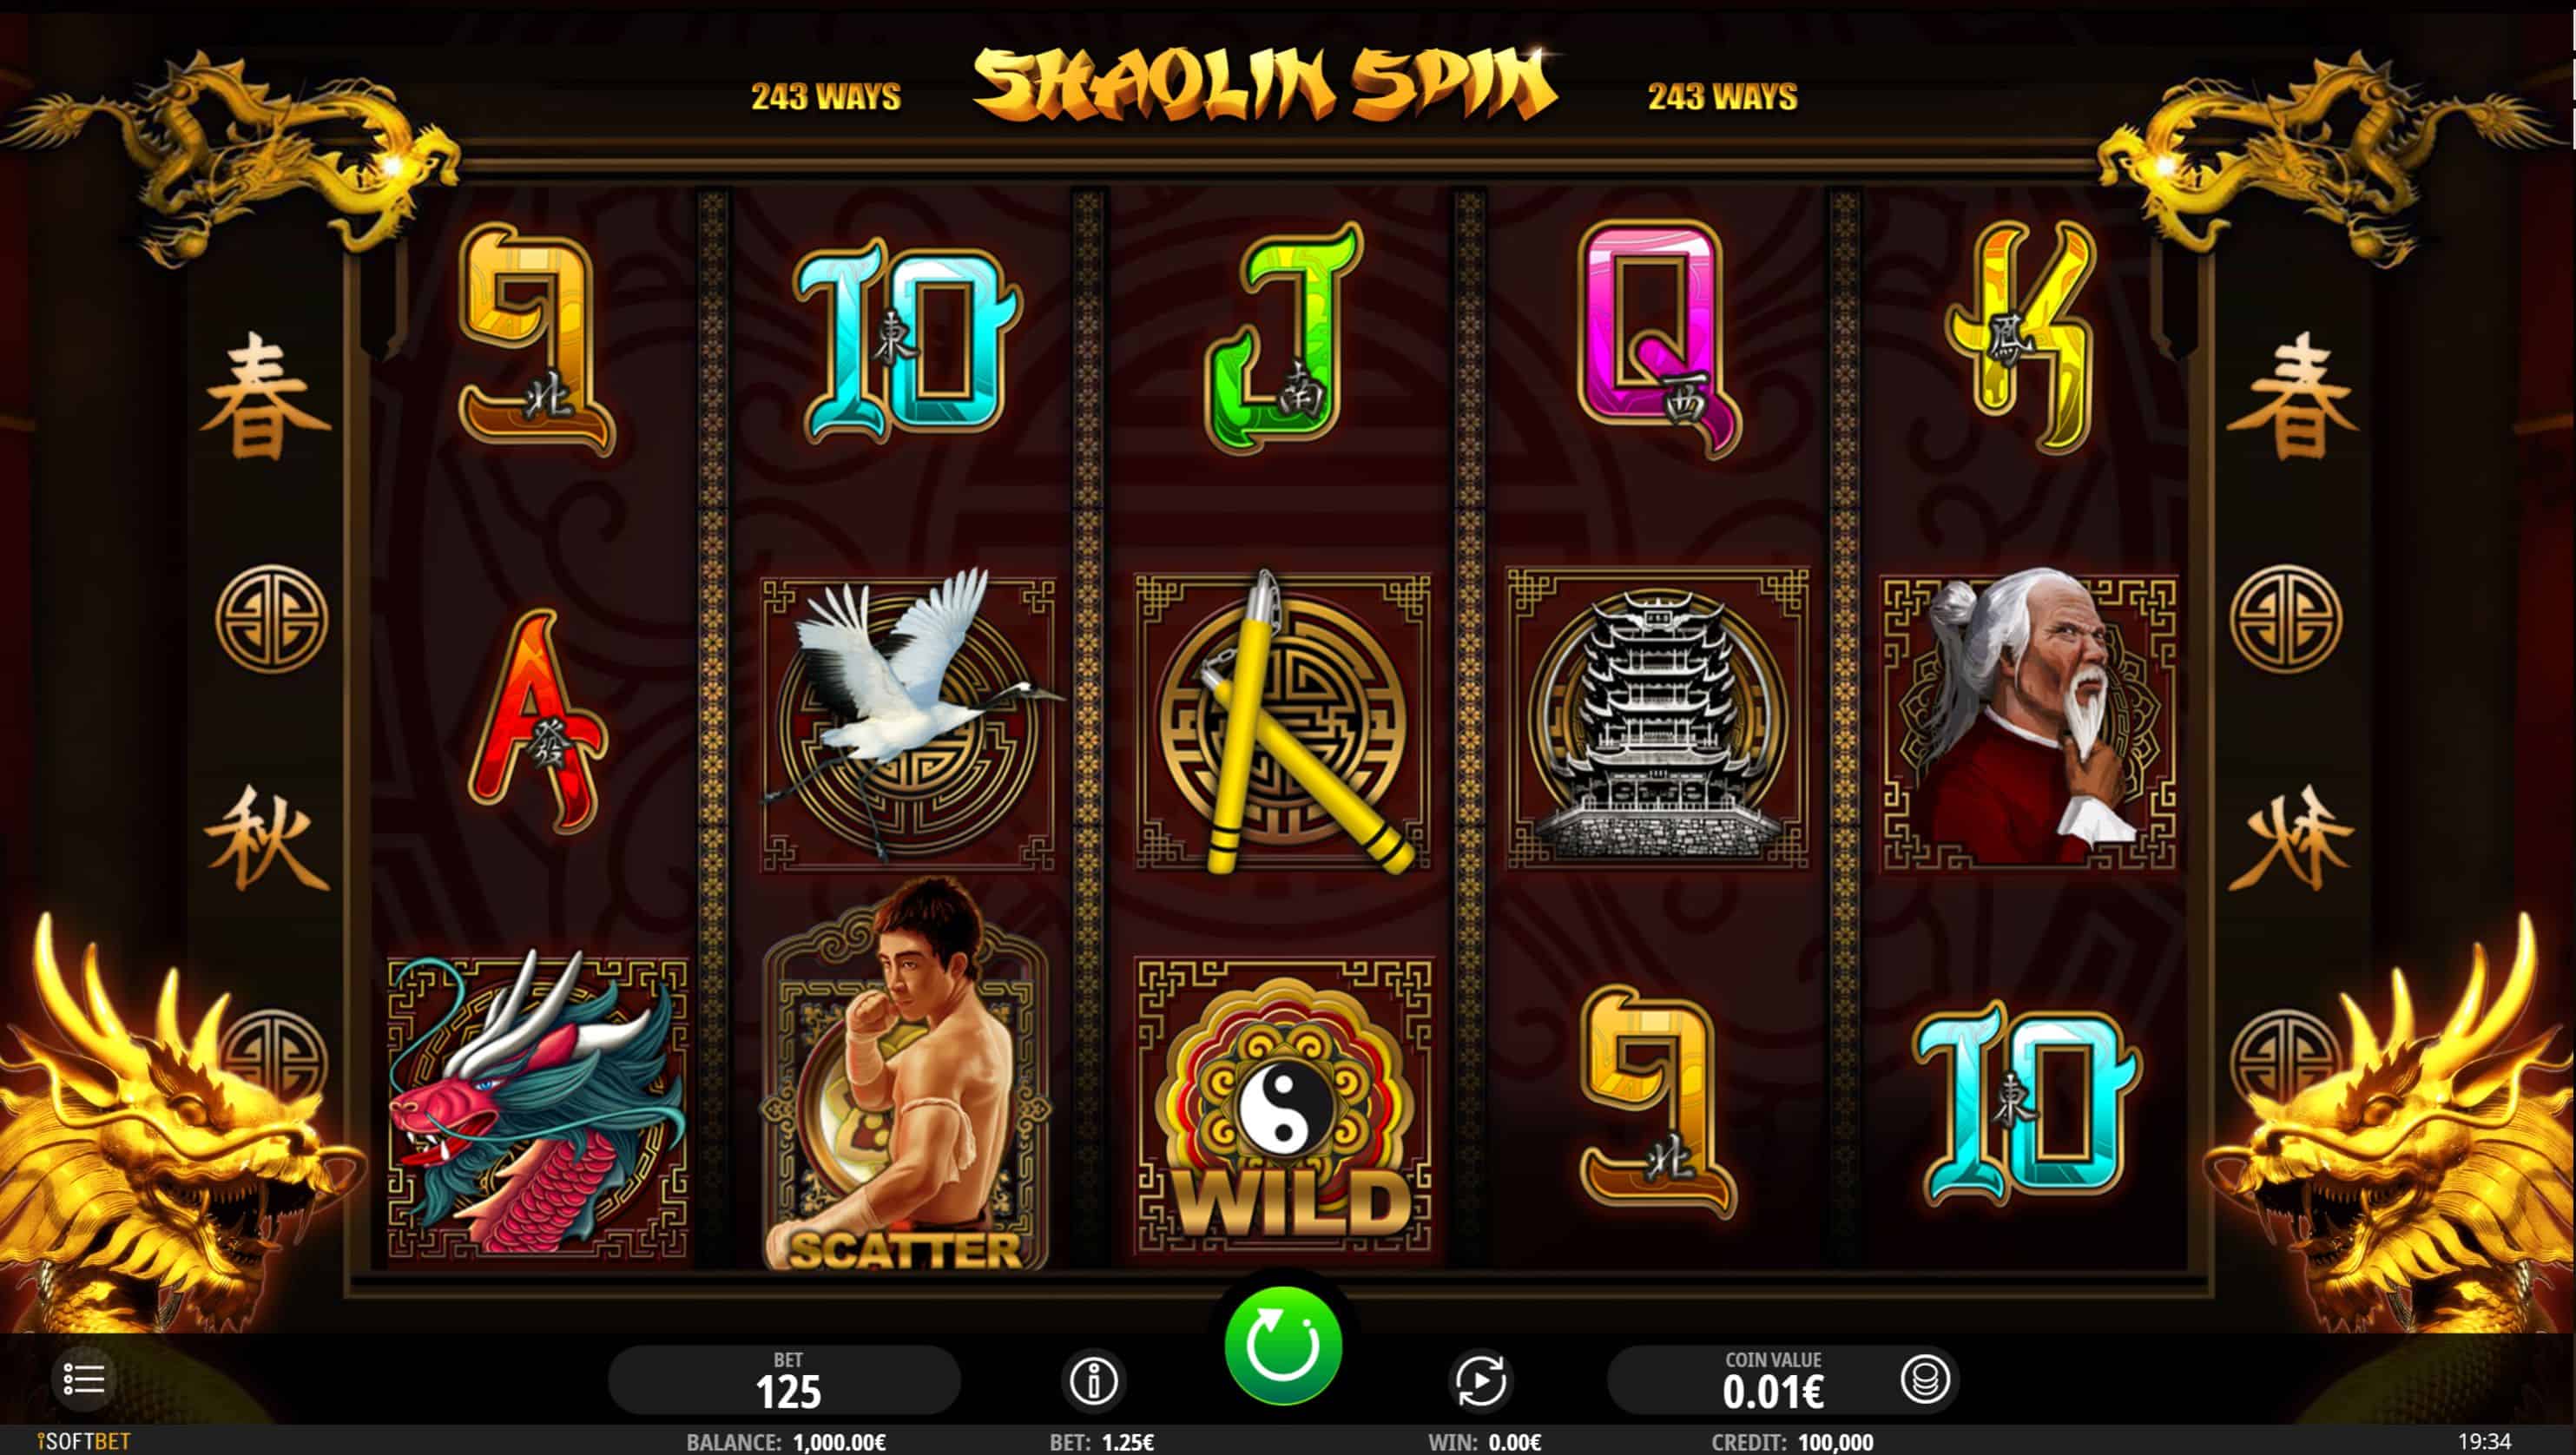 Shaolin Spin Slot Game Free Play at Casino Ireland 01